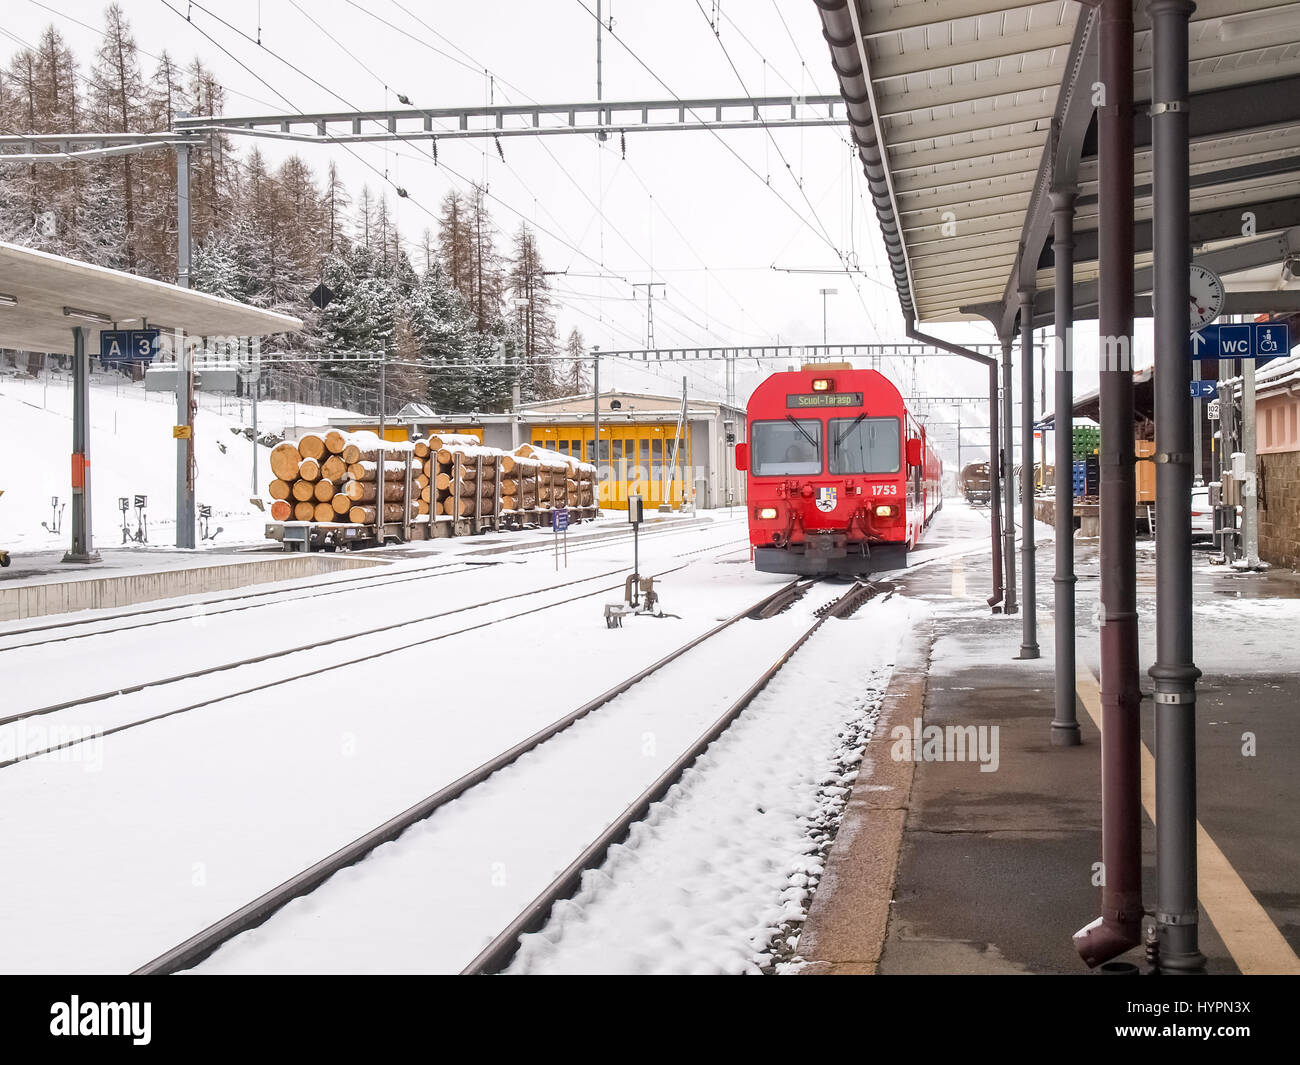 Poschiavo, Switzerland - April 27, 2016: Train of the Rhaetian Railway in transit at the Poschiavo station during a snowy day. Stock Photo